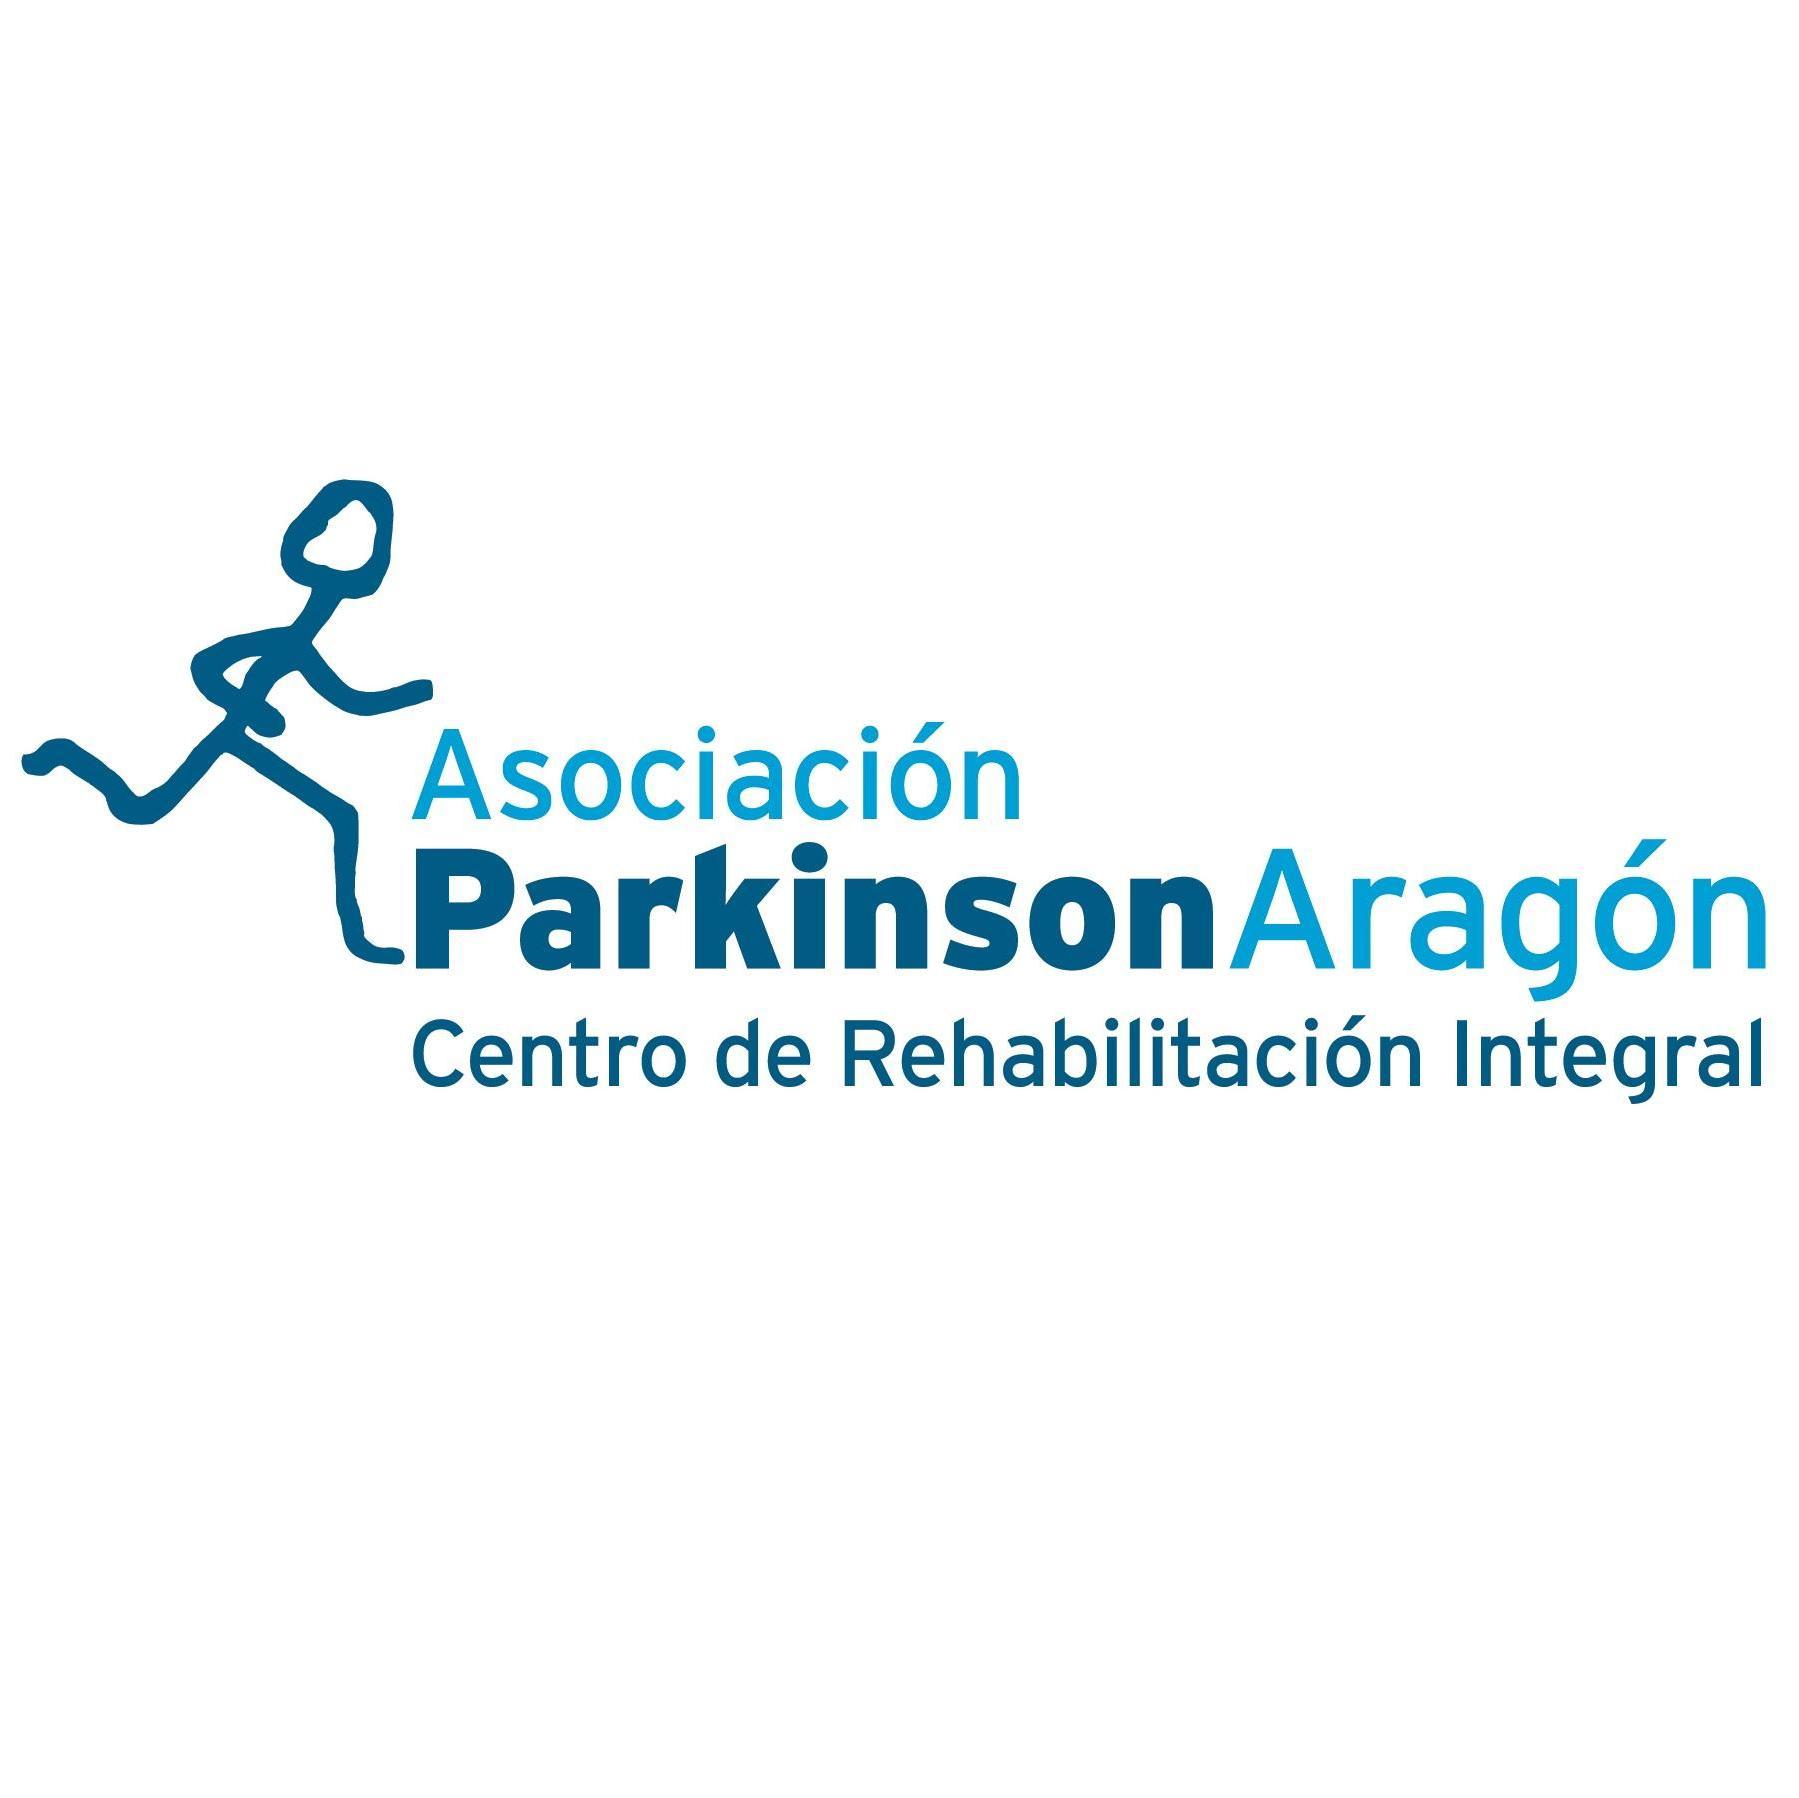 Asociación Parkinson Aragón - El teu perfil. Vota, valora i comunica’t